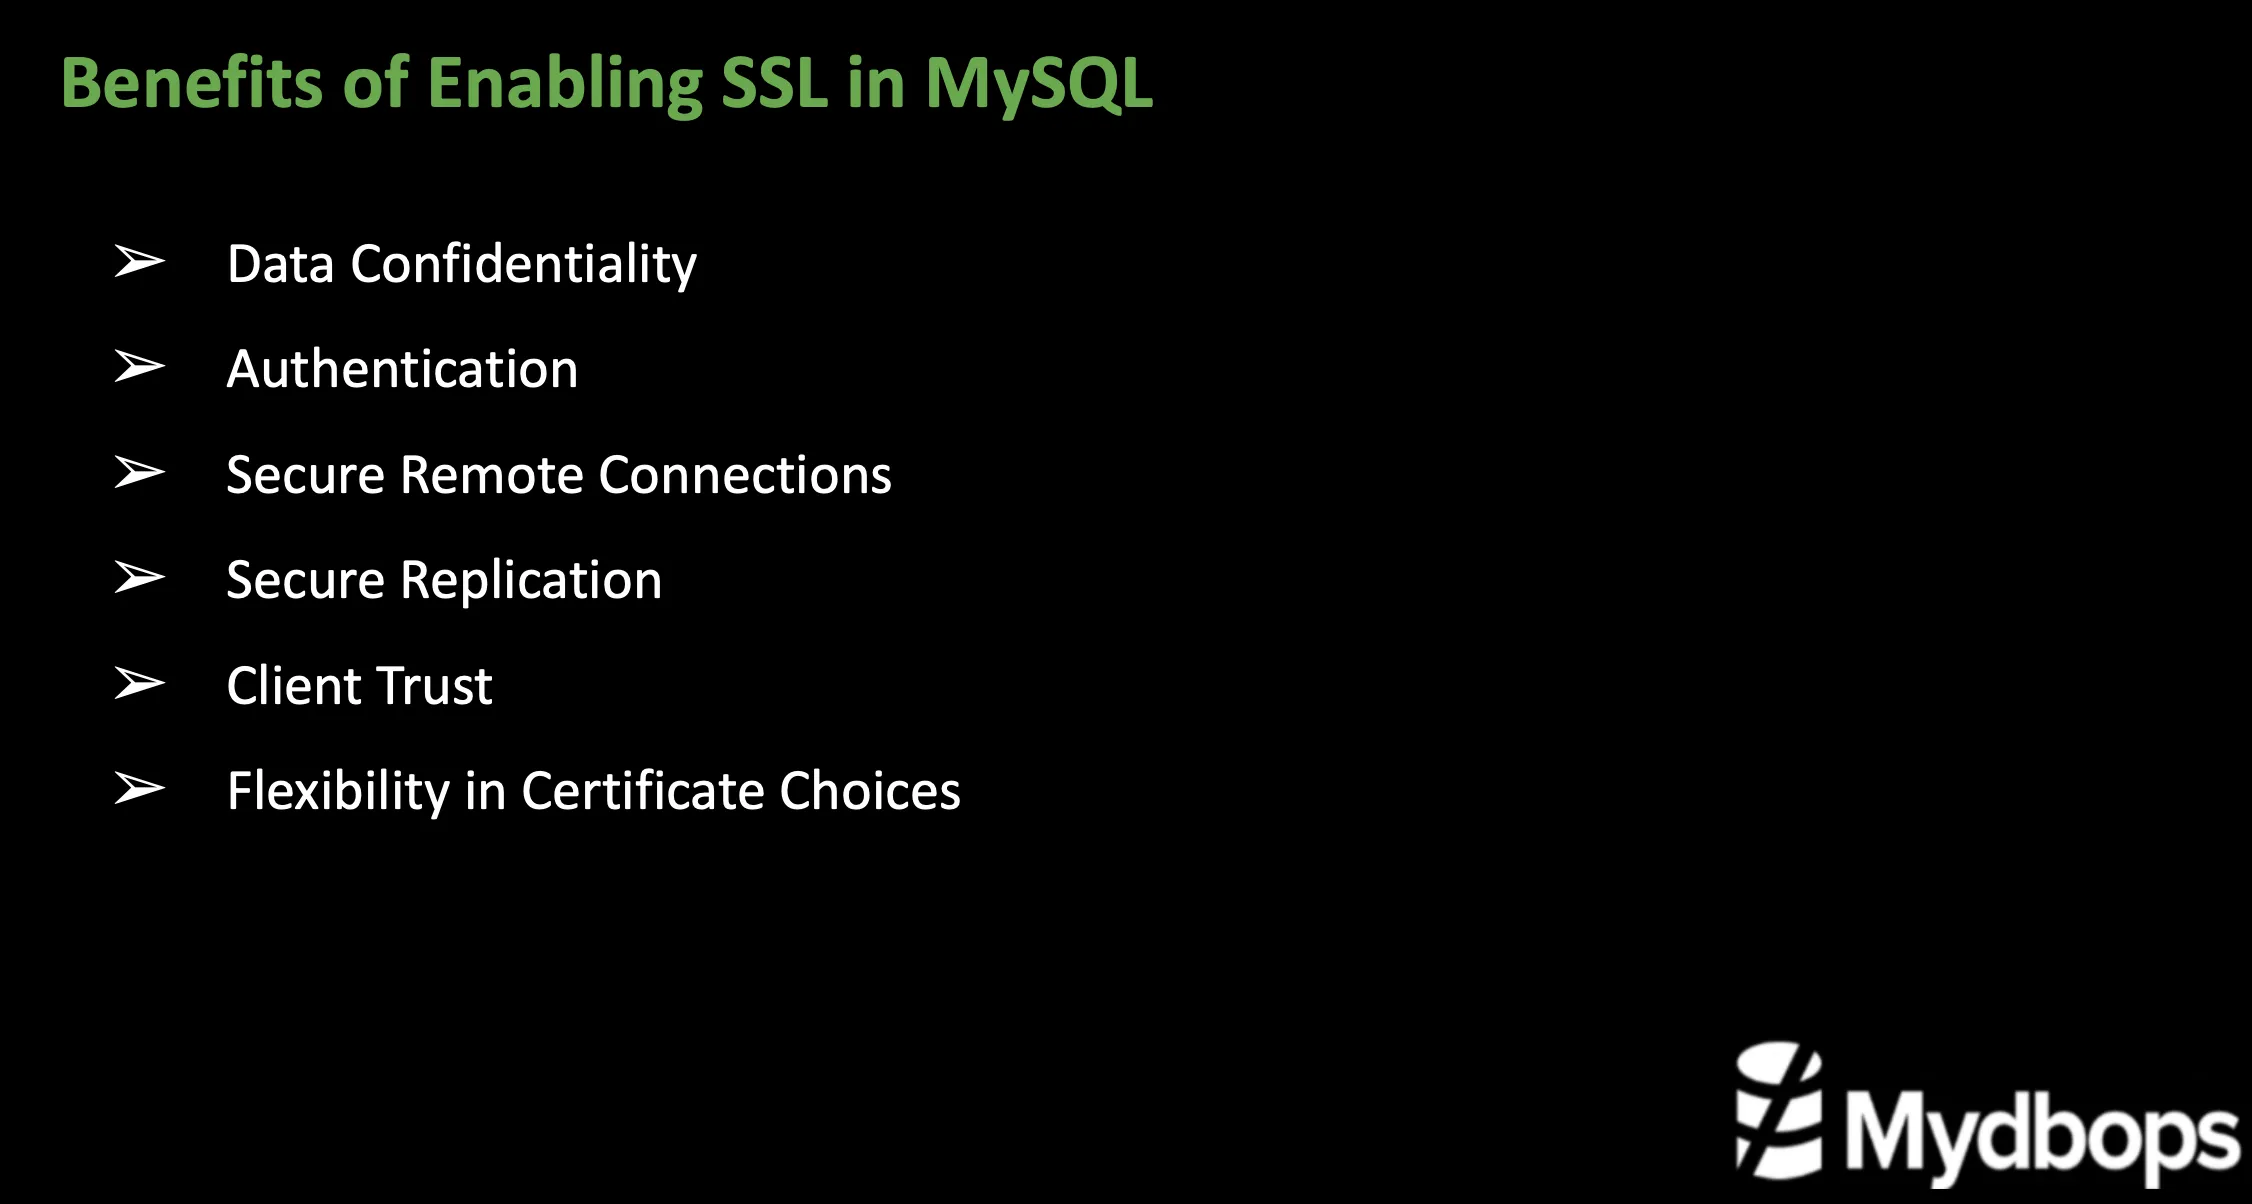 Enabling SSL in MySQL